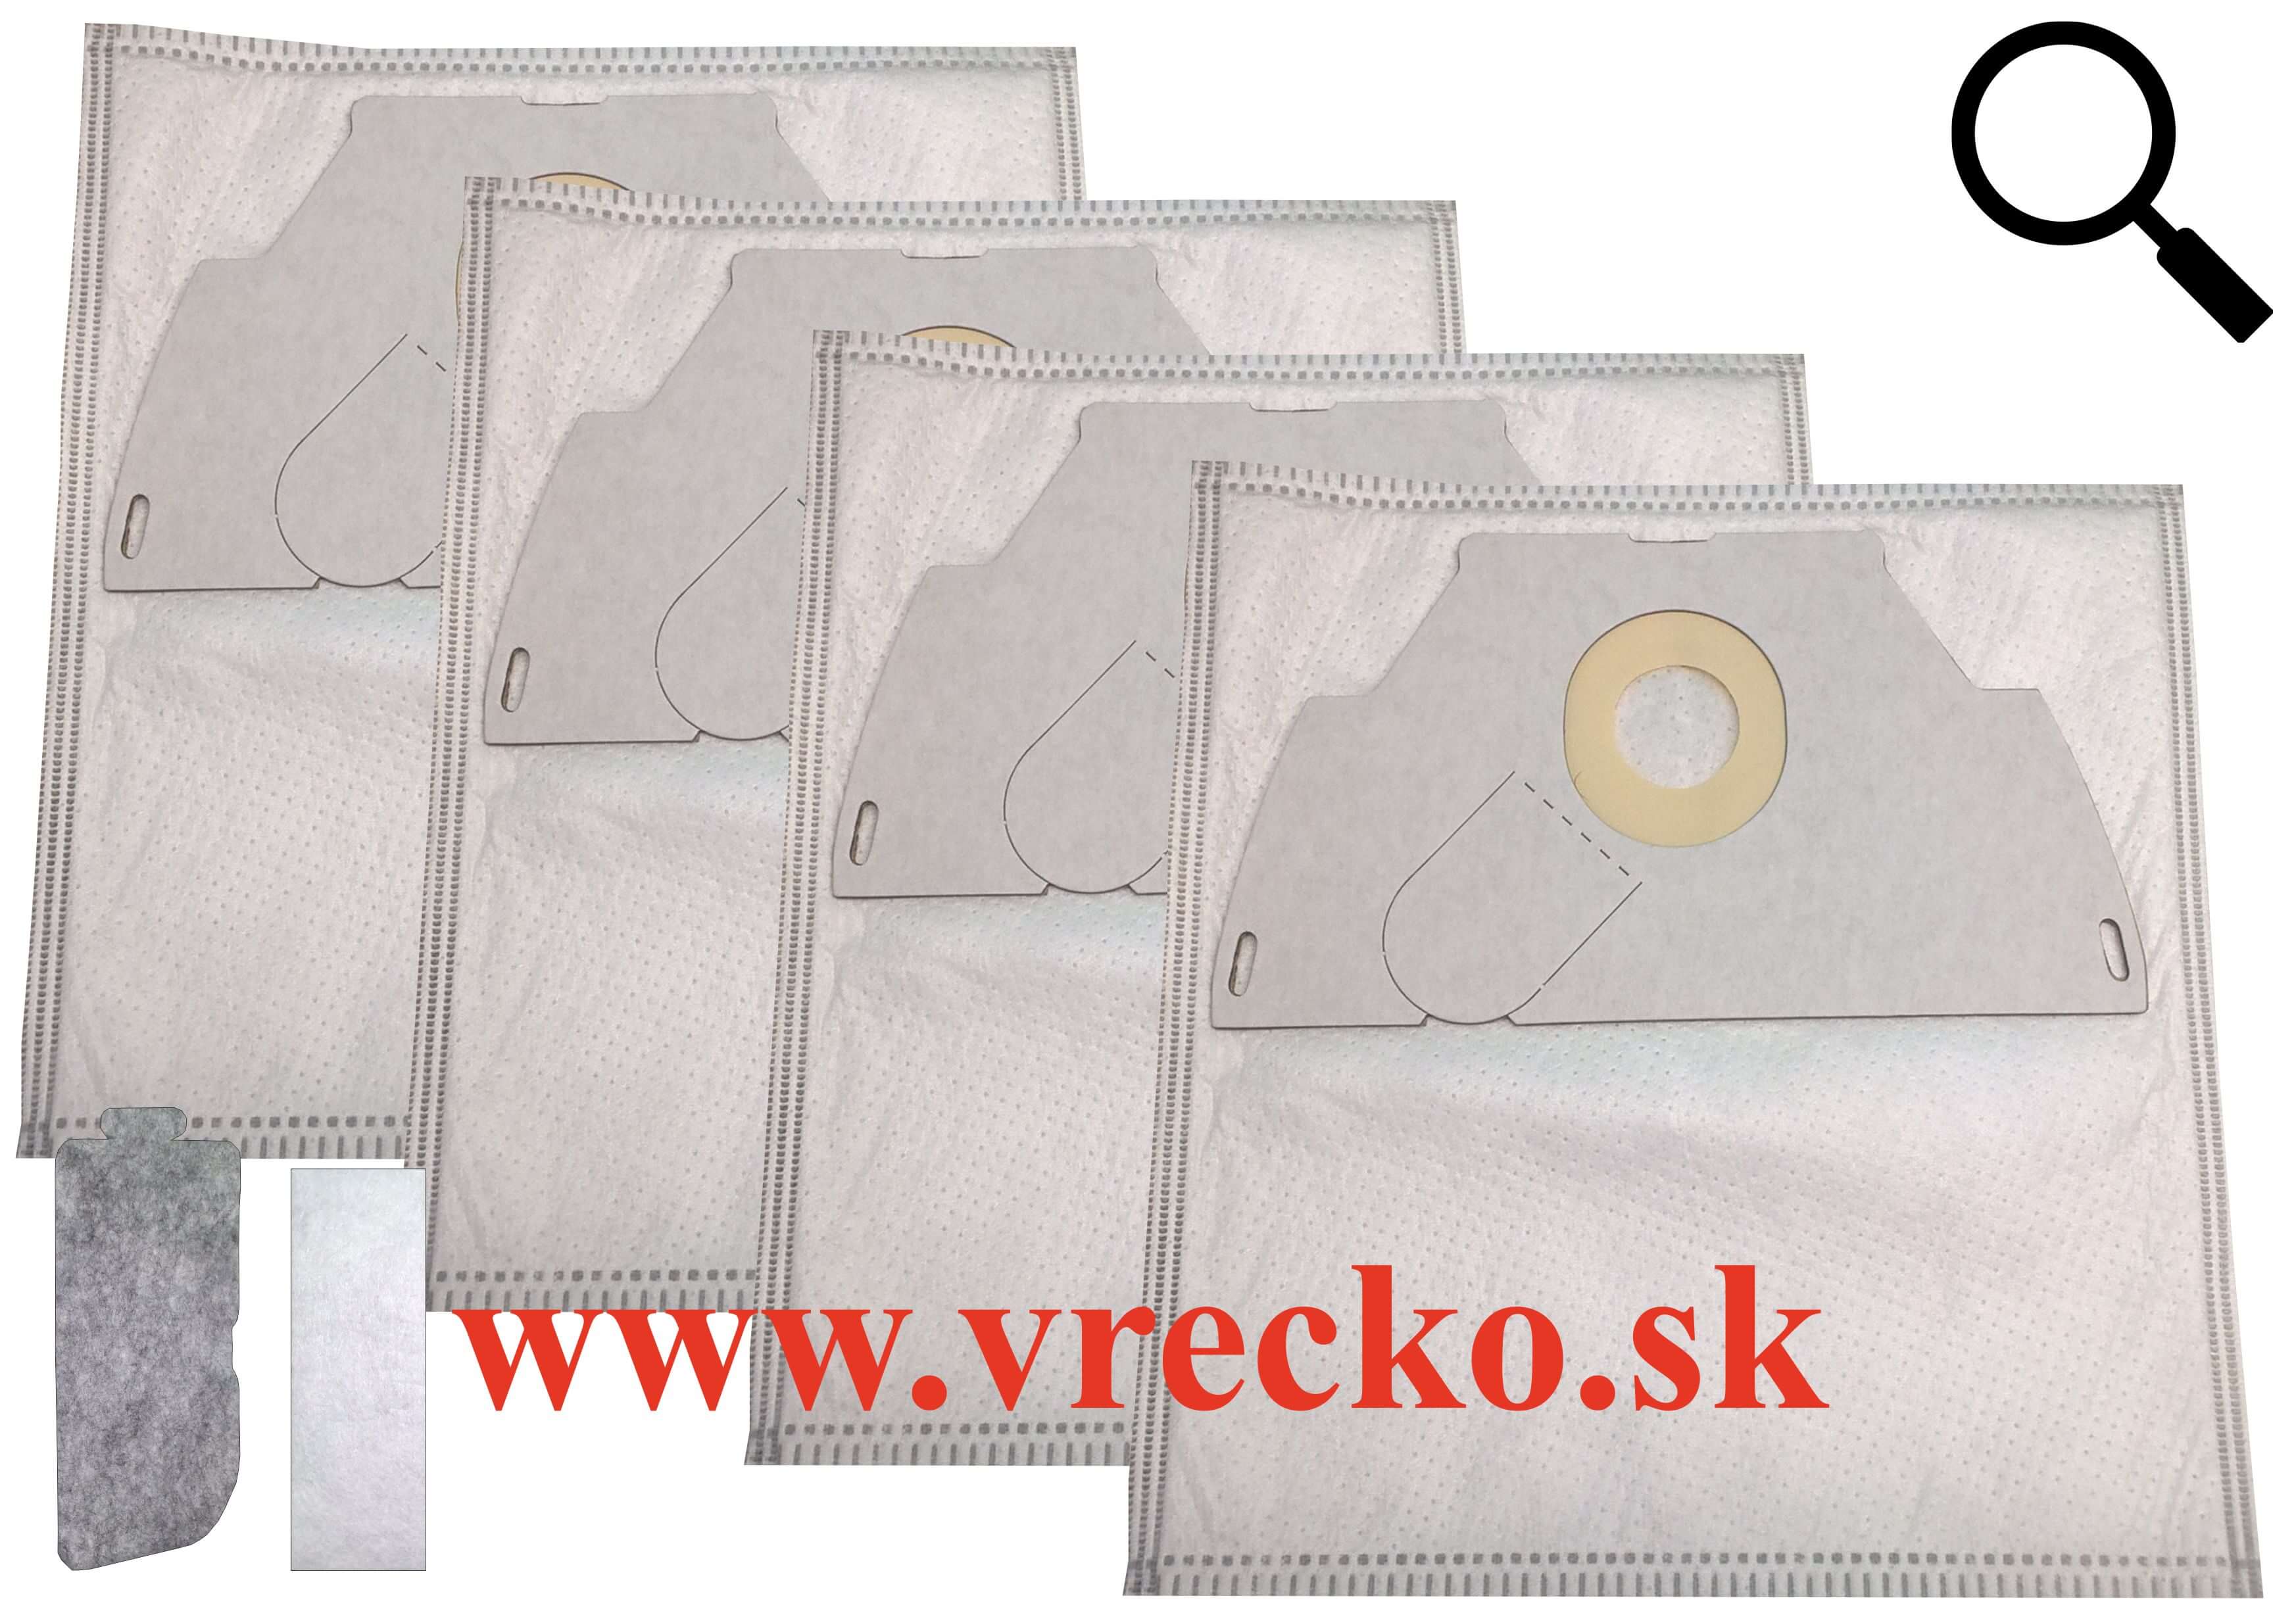 Electrolux 3601 textilné vrecká do vysávača, 4ks